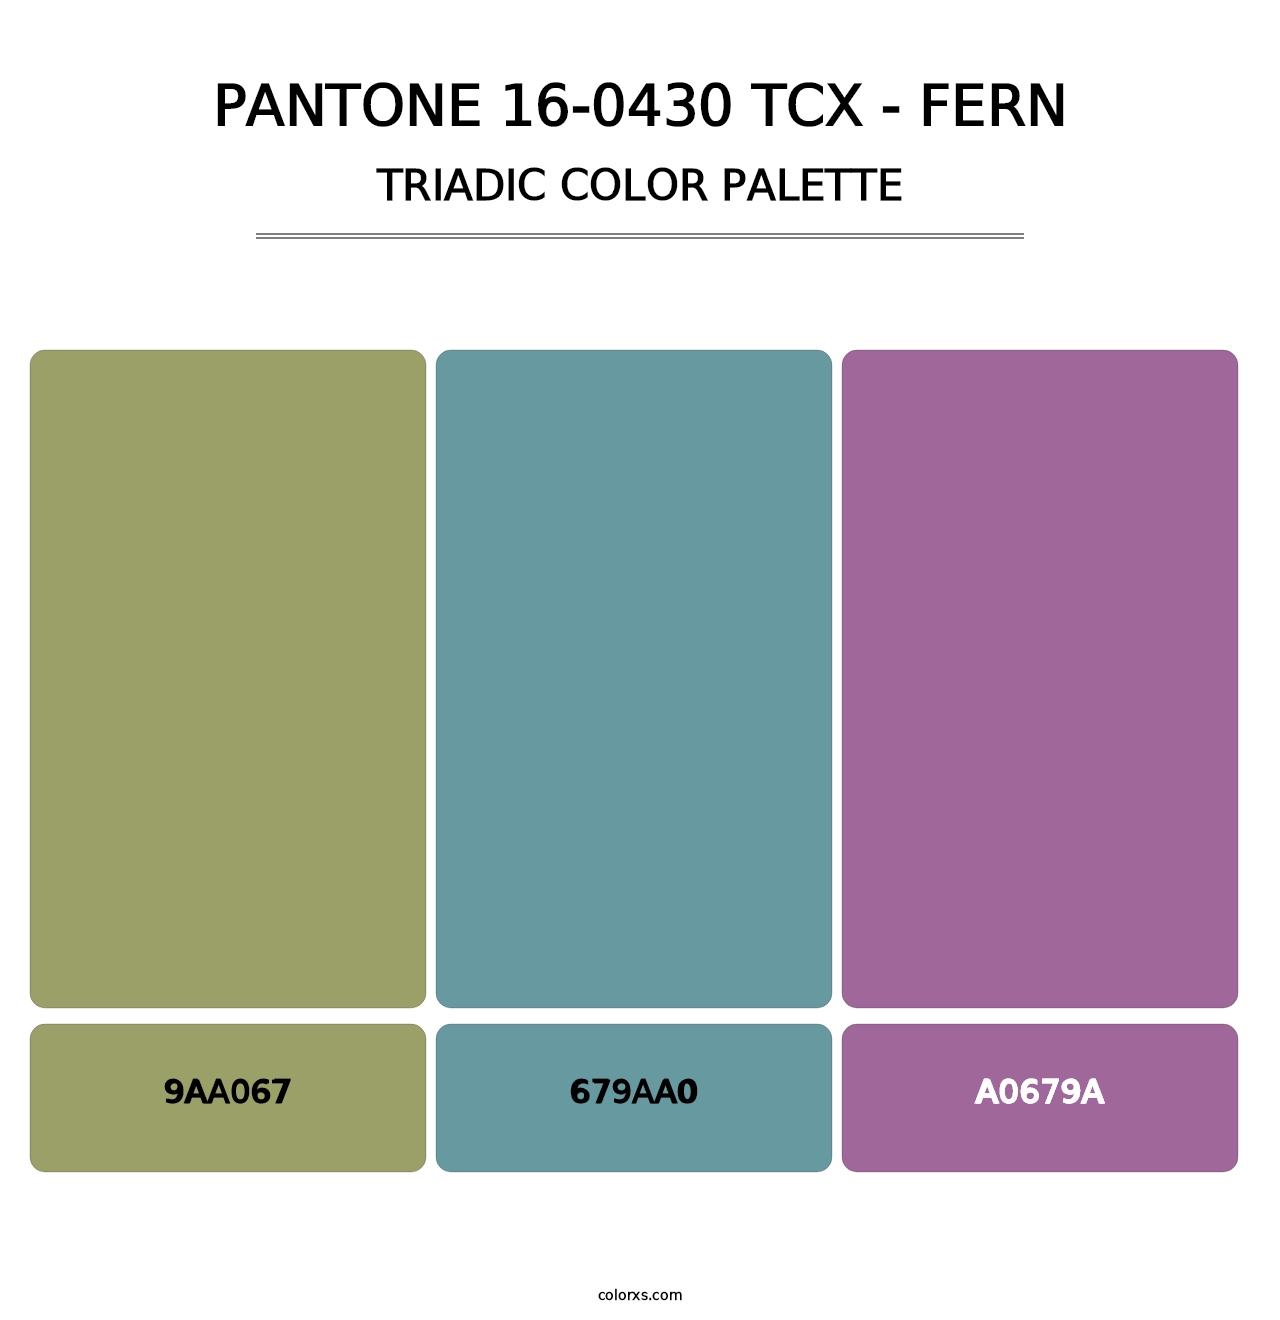 PANTONE 16-0430 TCX - Fern - Triadic Color Palette